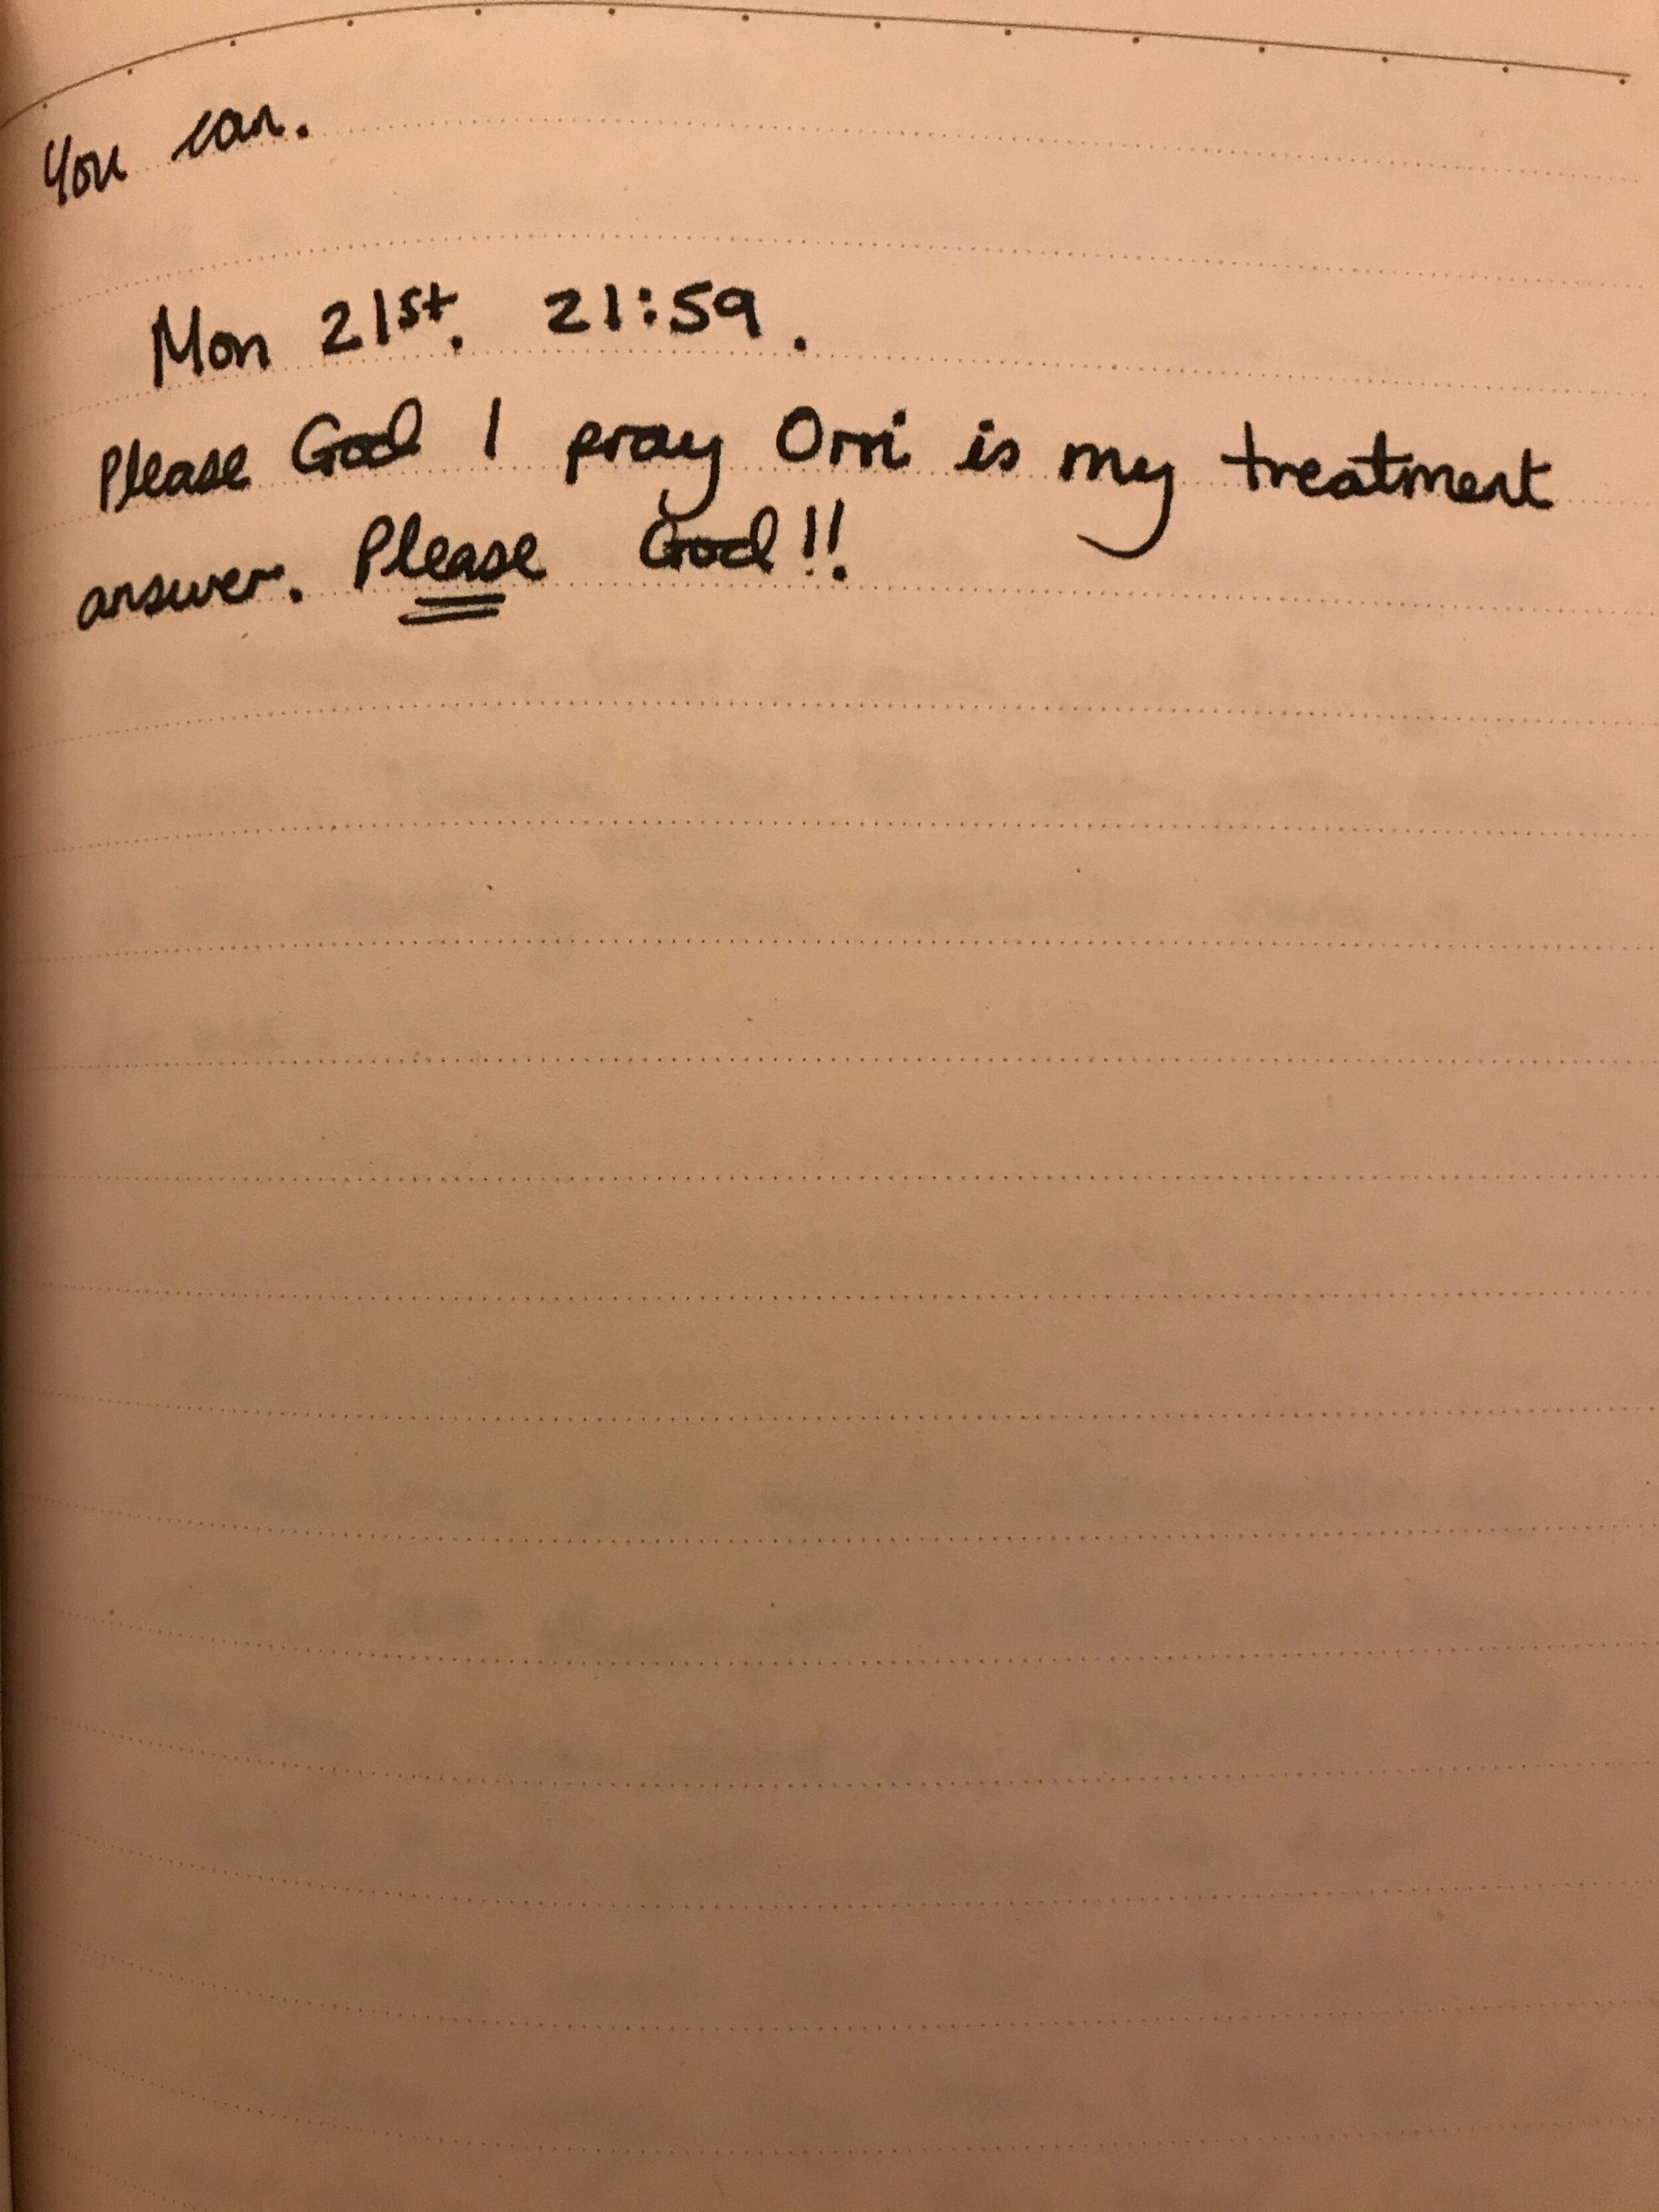 A diary entry having visited Orri back in October